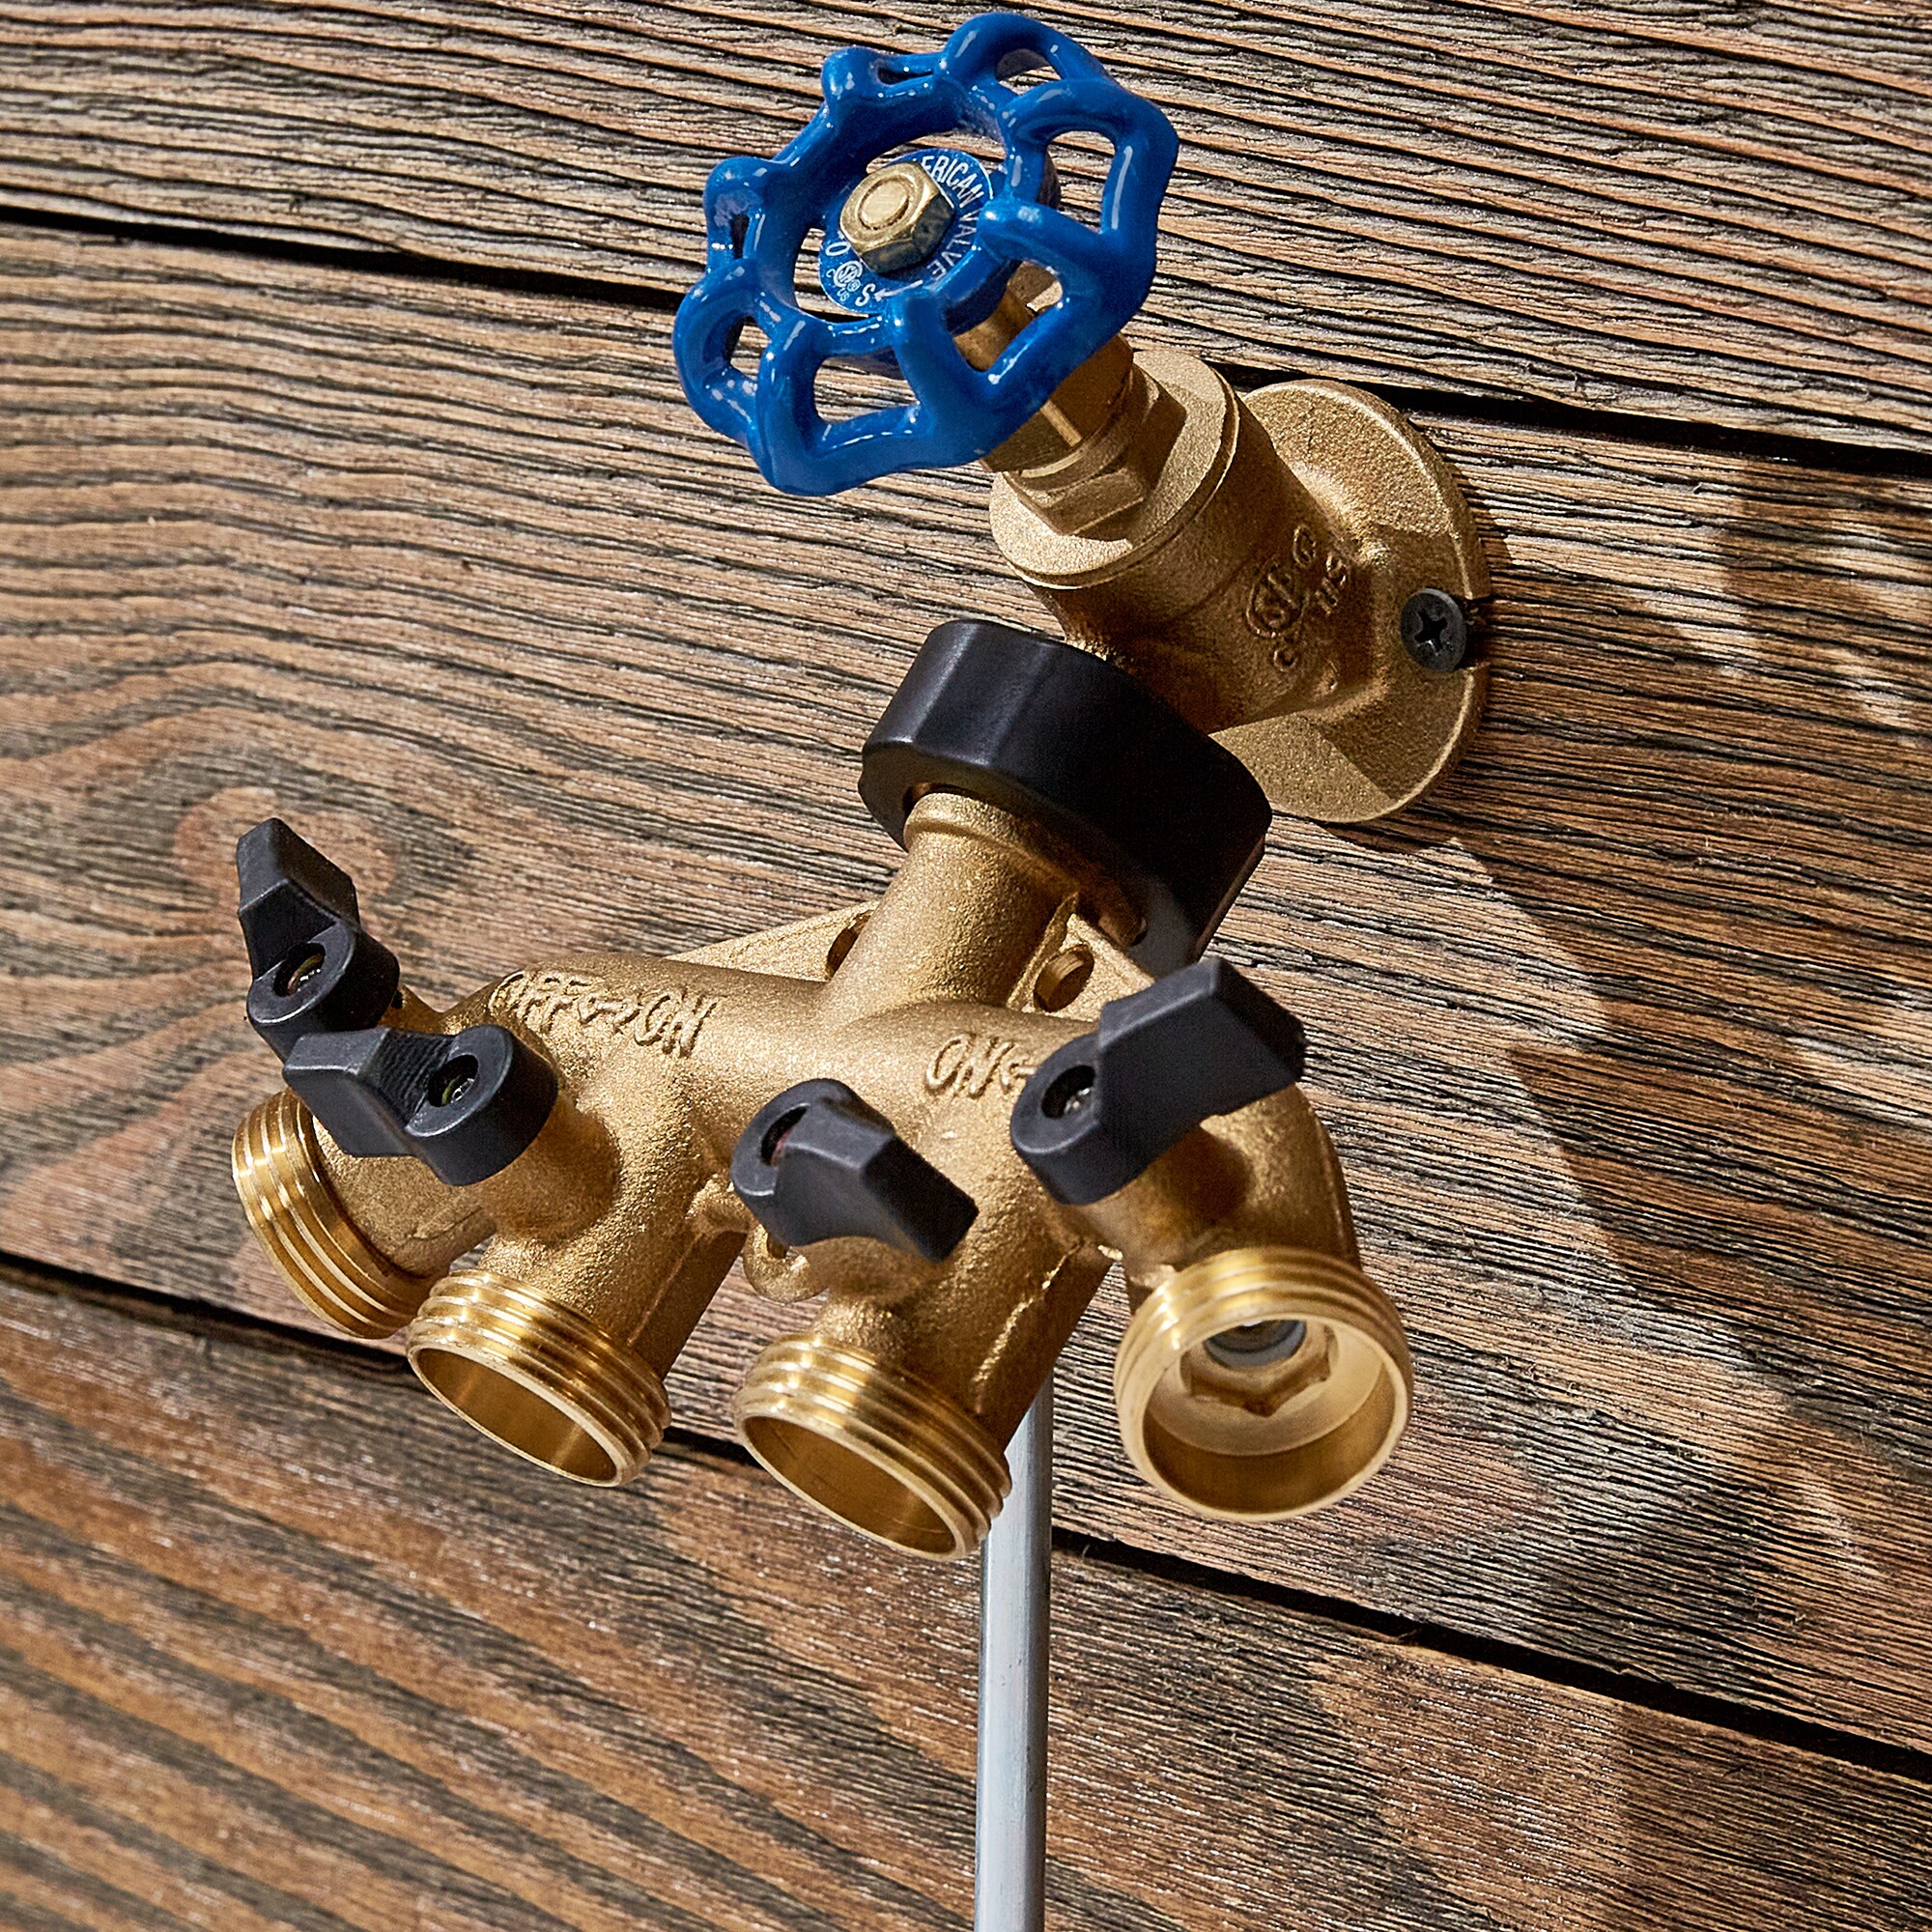 1# 4 Way Brass Garden Hose Splitter Heavy Duty Garden Tap Hose Adapter Nozzle Switcher Connector with 4 Shut-Off Valves for Garden Irrigation Watering